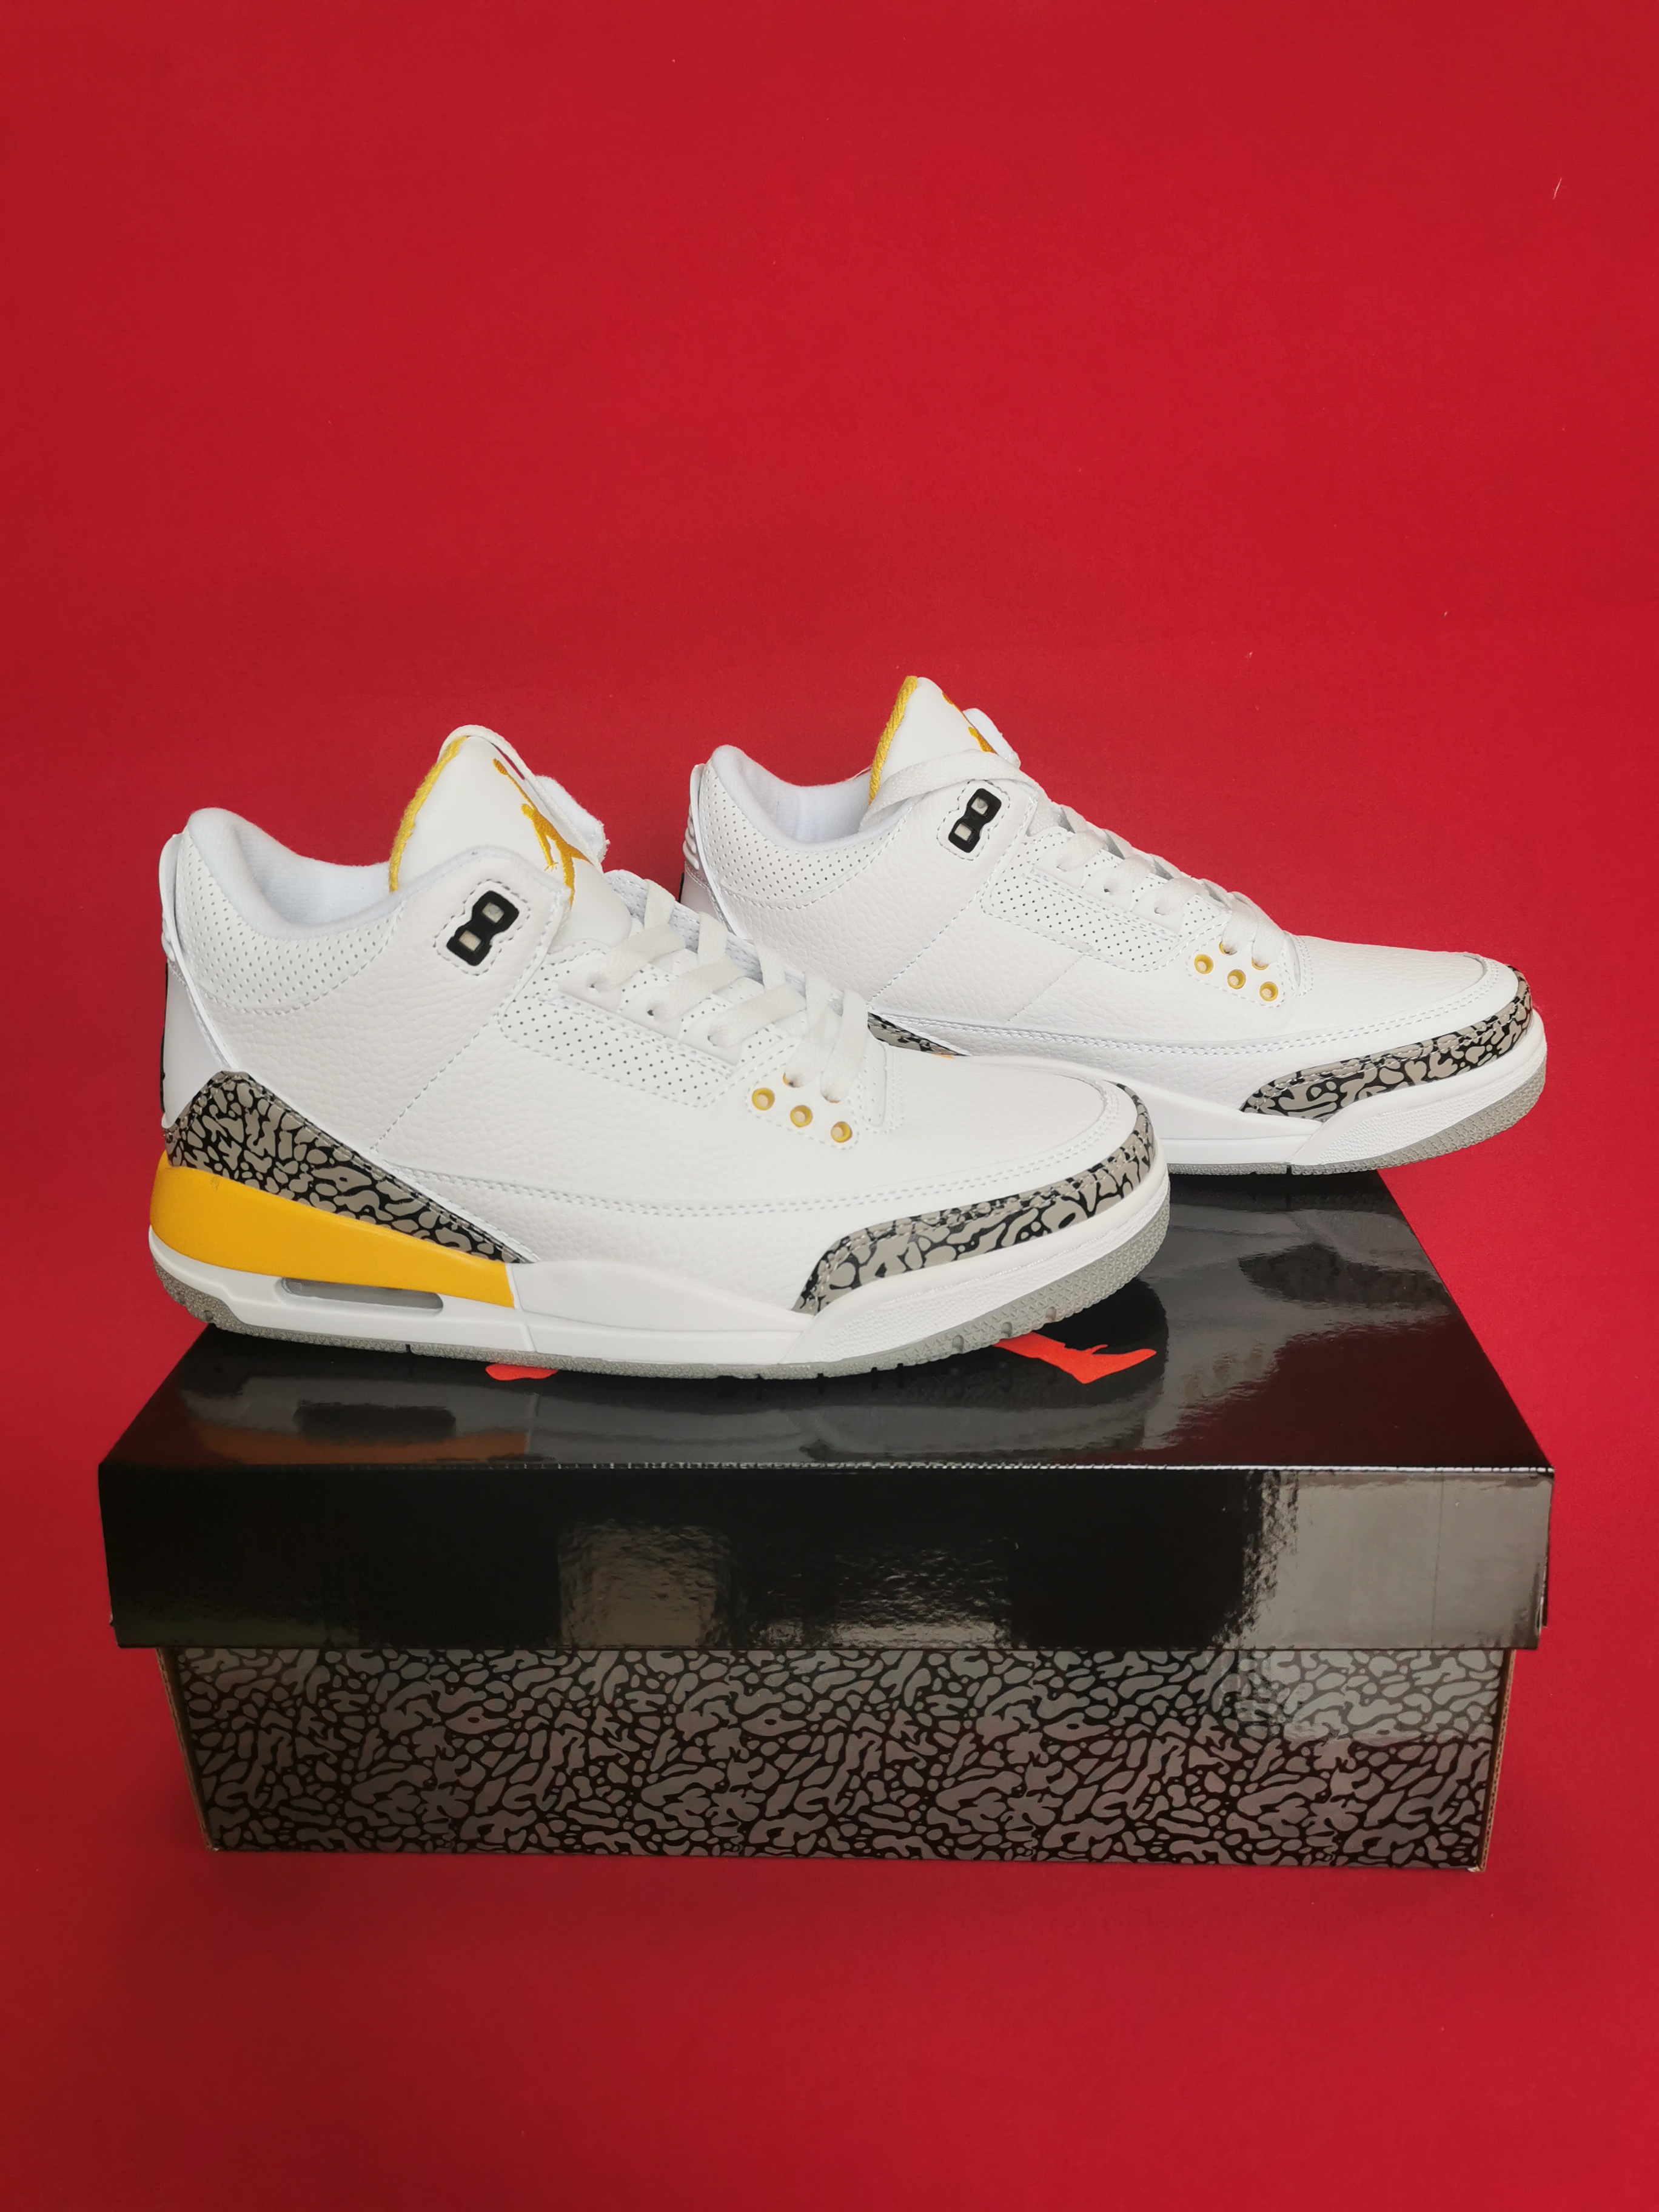 Air Jordan 3 White Yellow Grey Retro Shoes